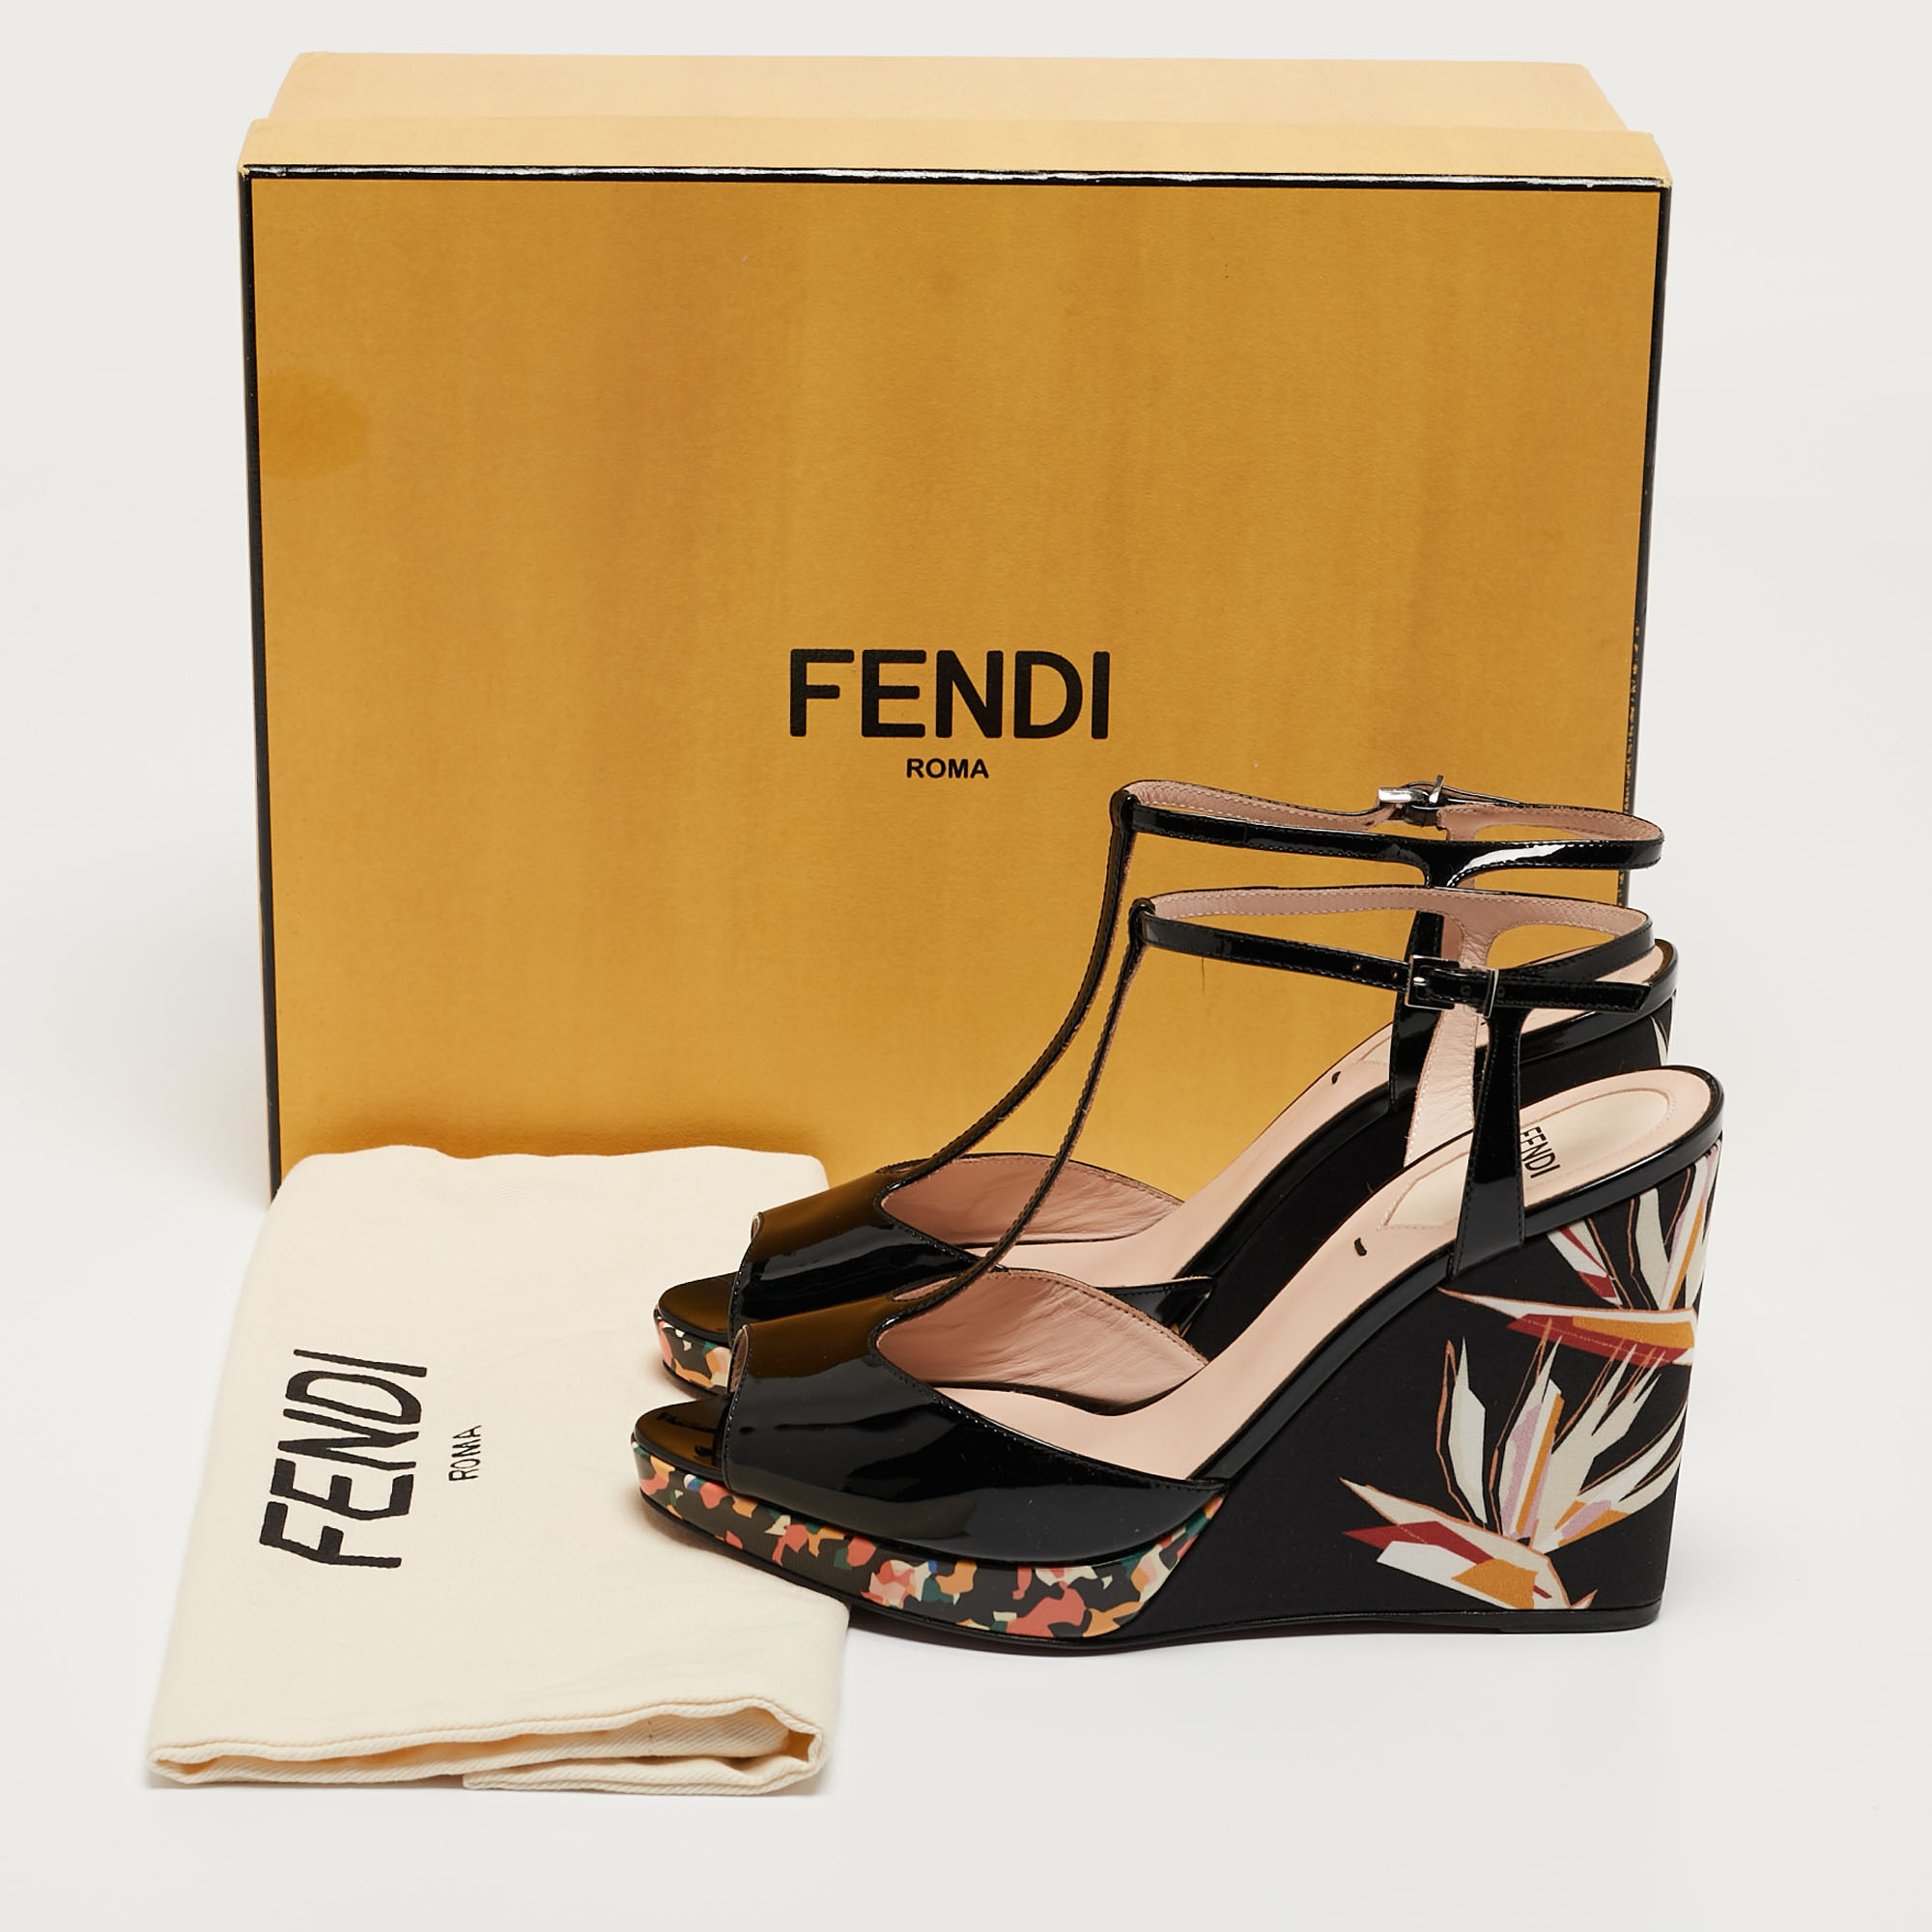 Fendi Black Patent Leather Bird Of Paradise T-Strap Wedge Sandals Size 36